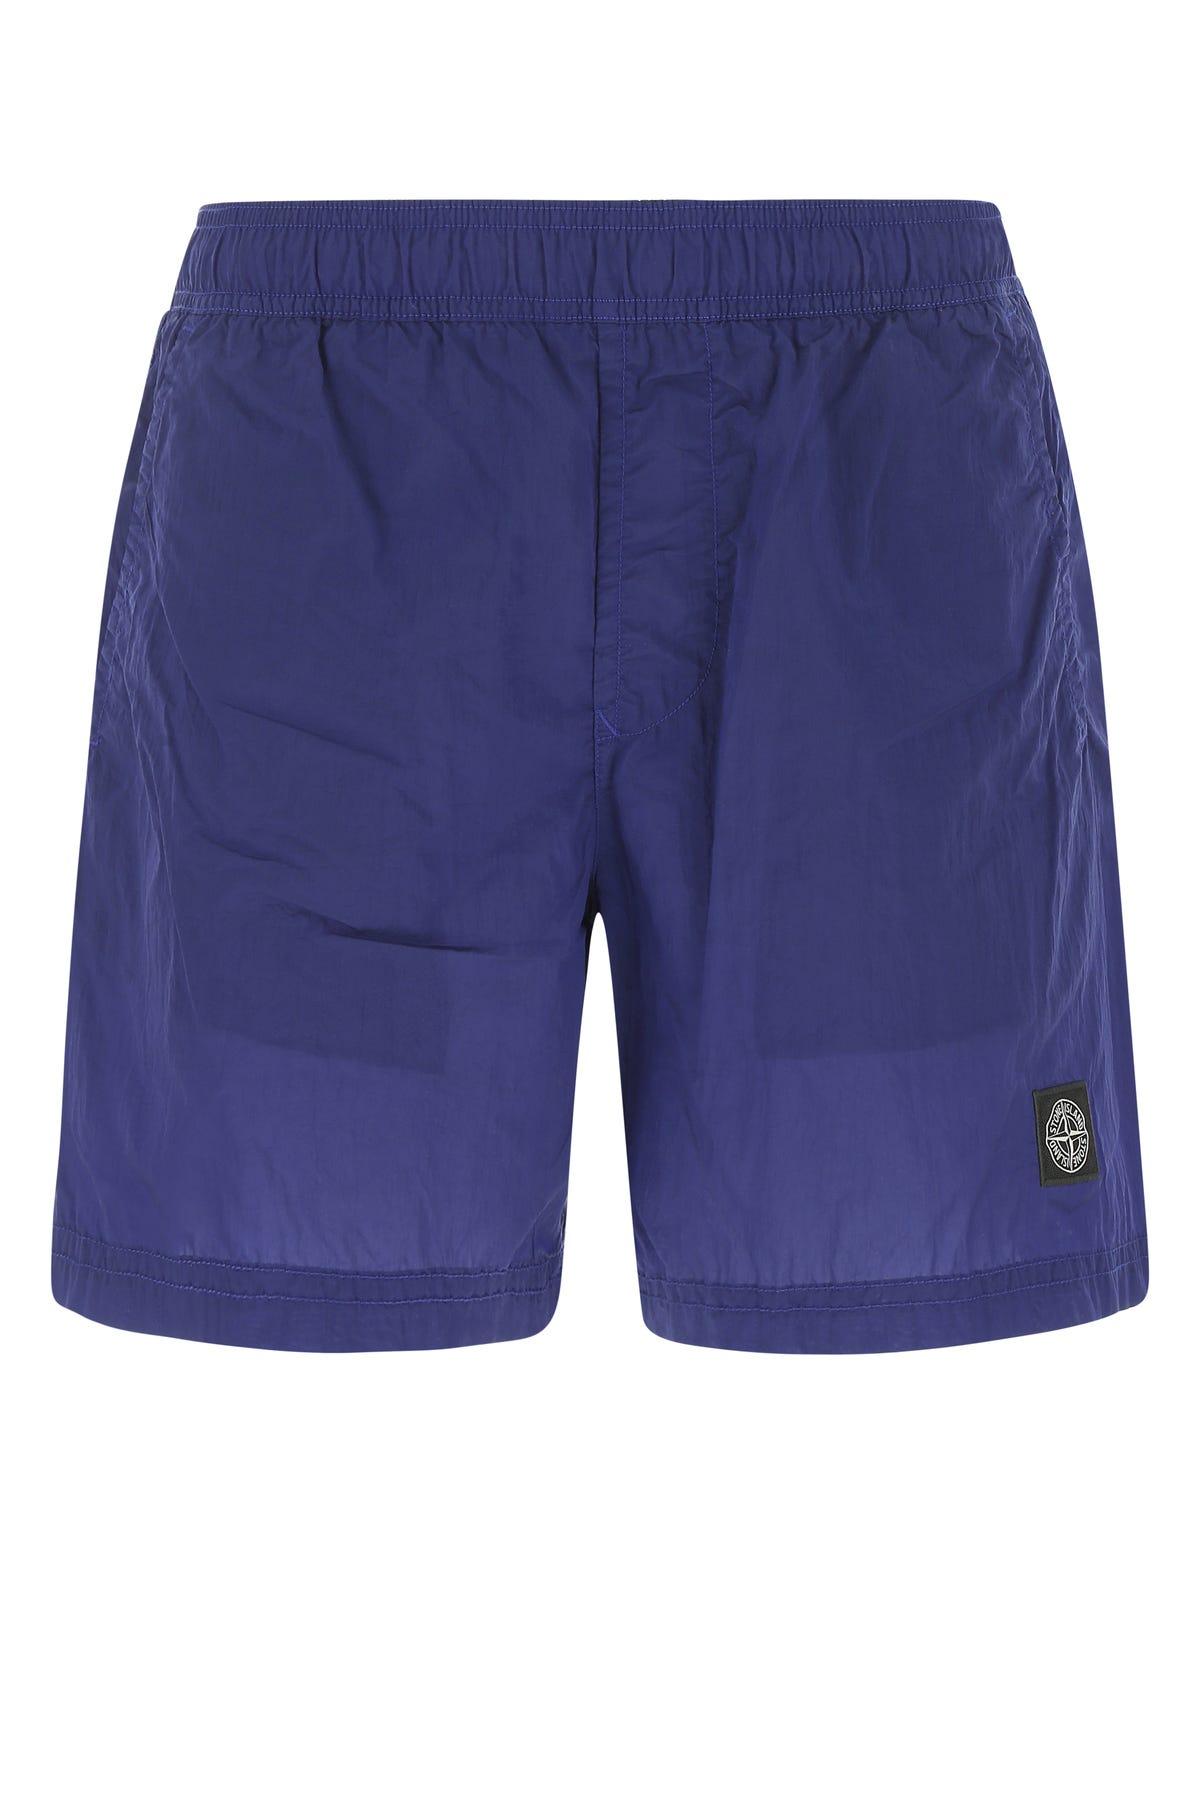 Stone Island Nylon Swimming Shorts in Blue for Men | Lyst